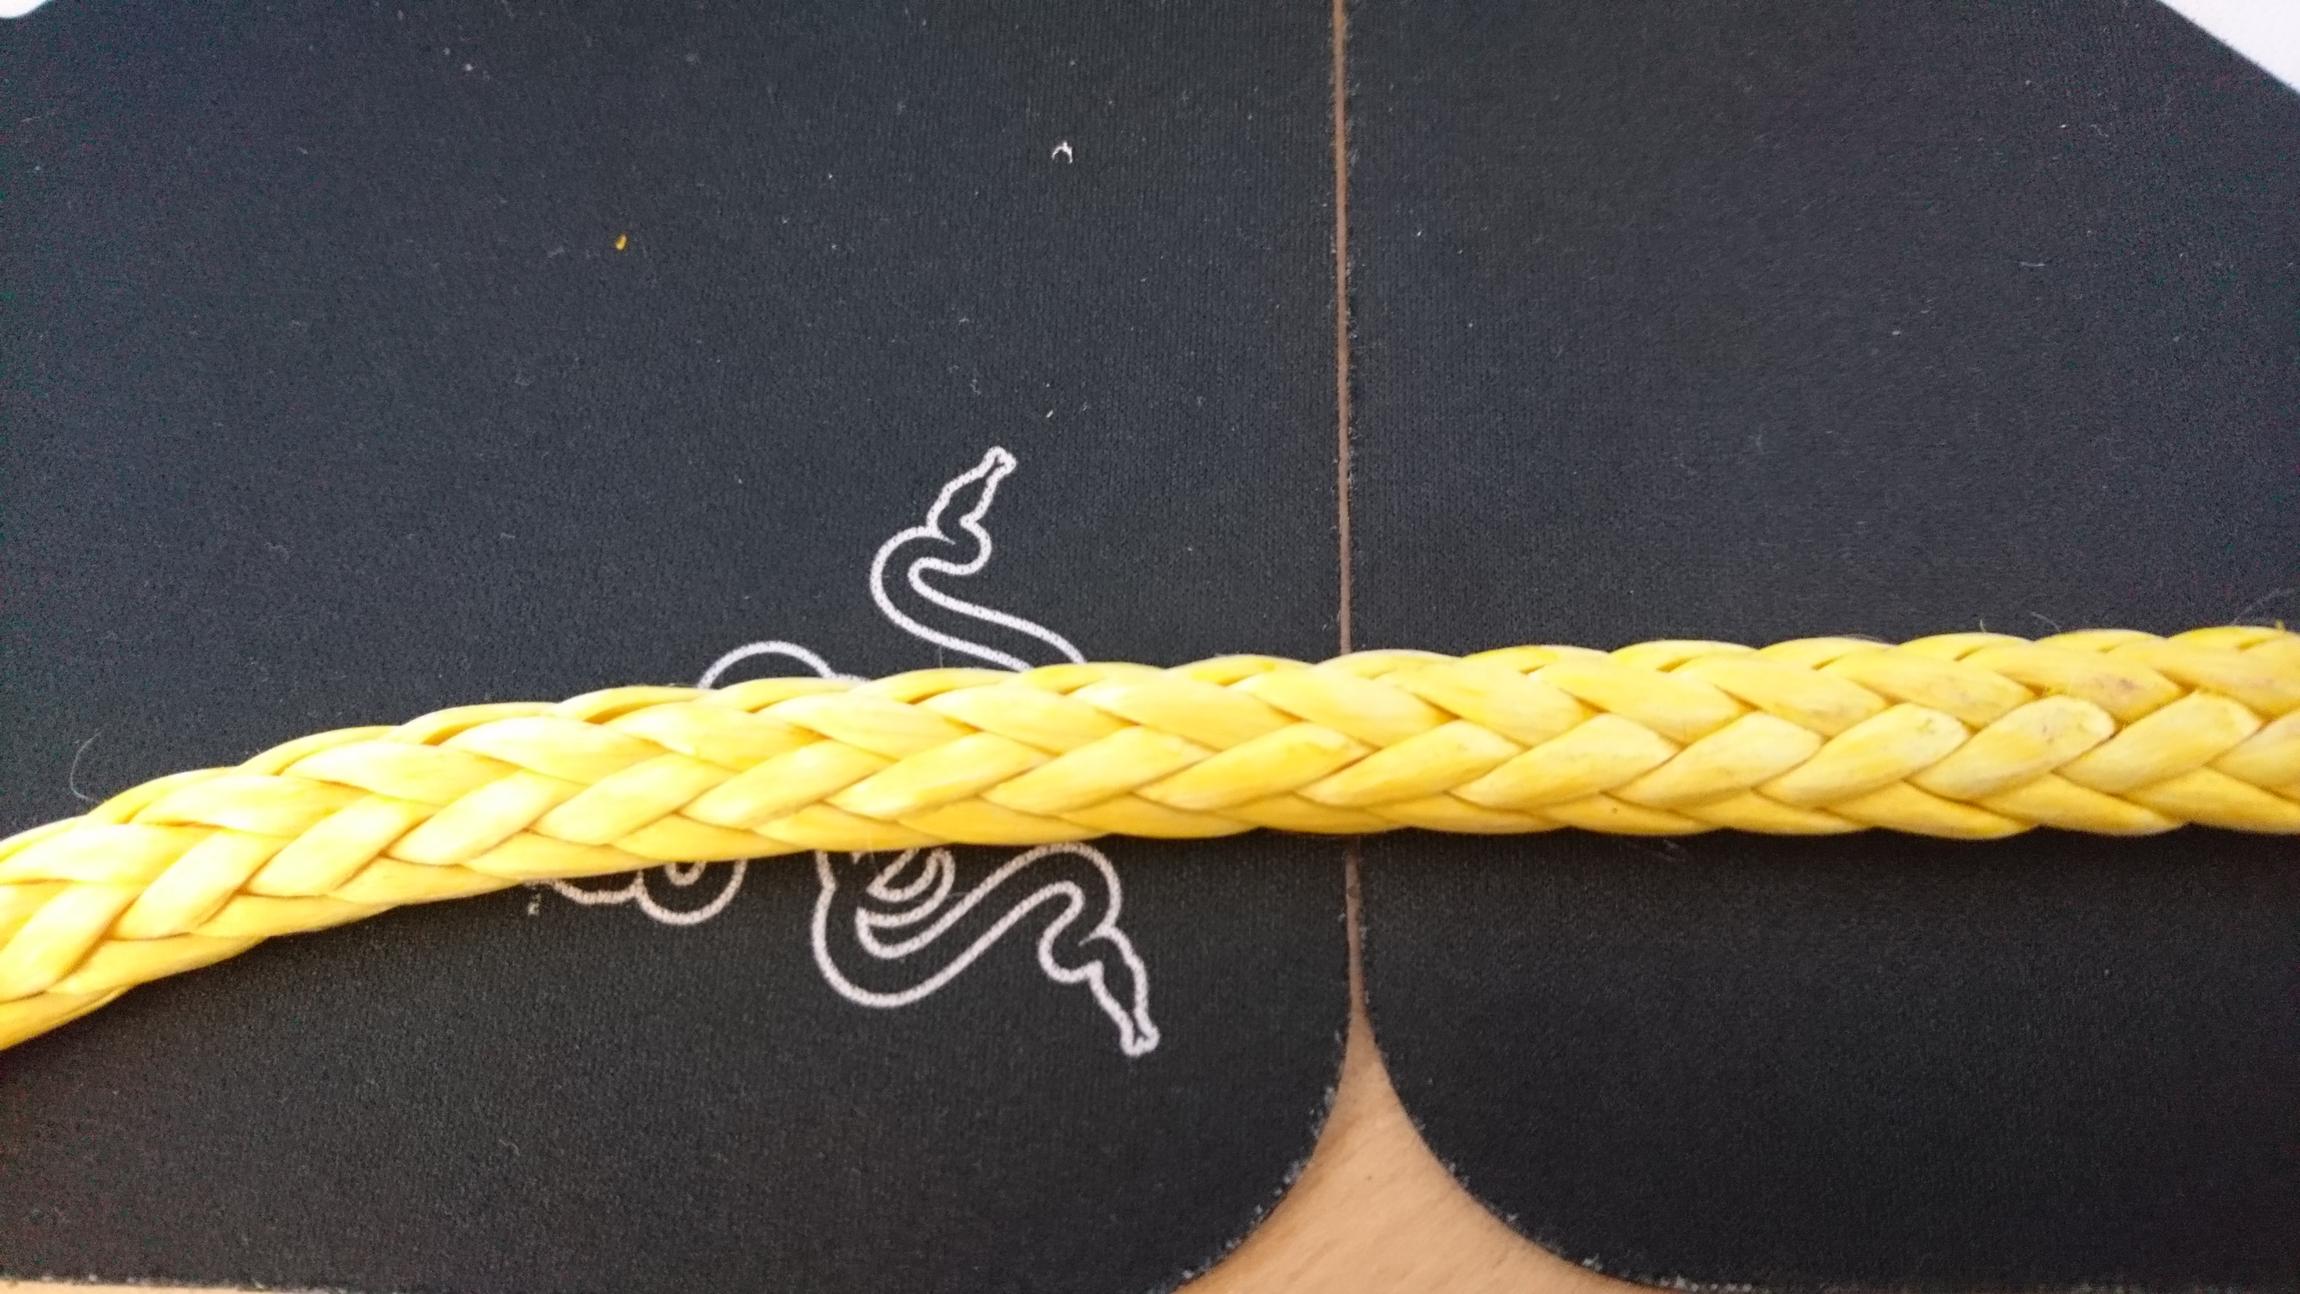 Modeling a 12-strand double-weave rope? - Modeling - Blender